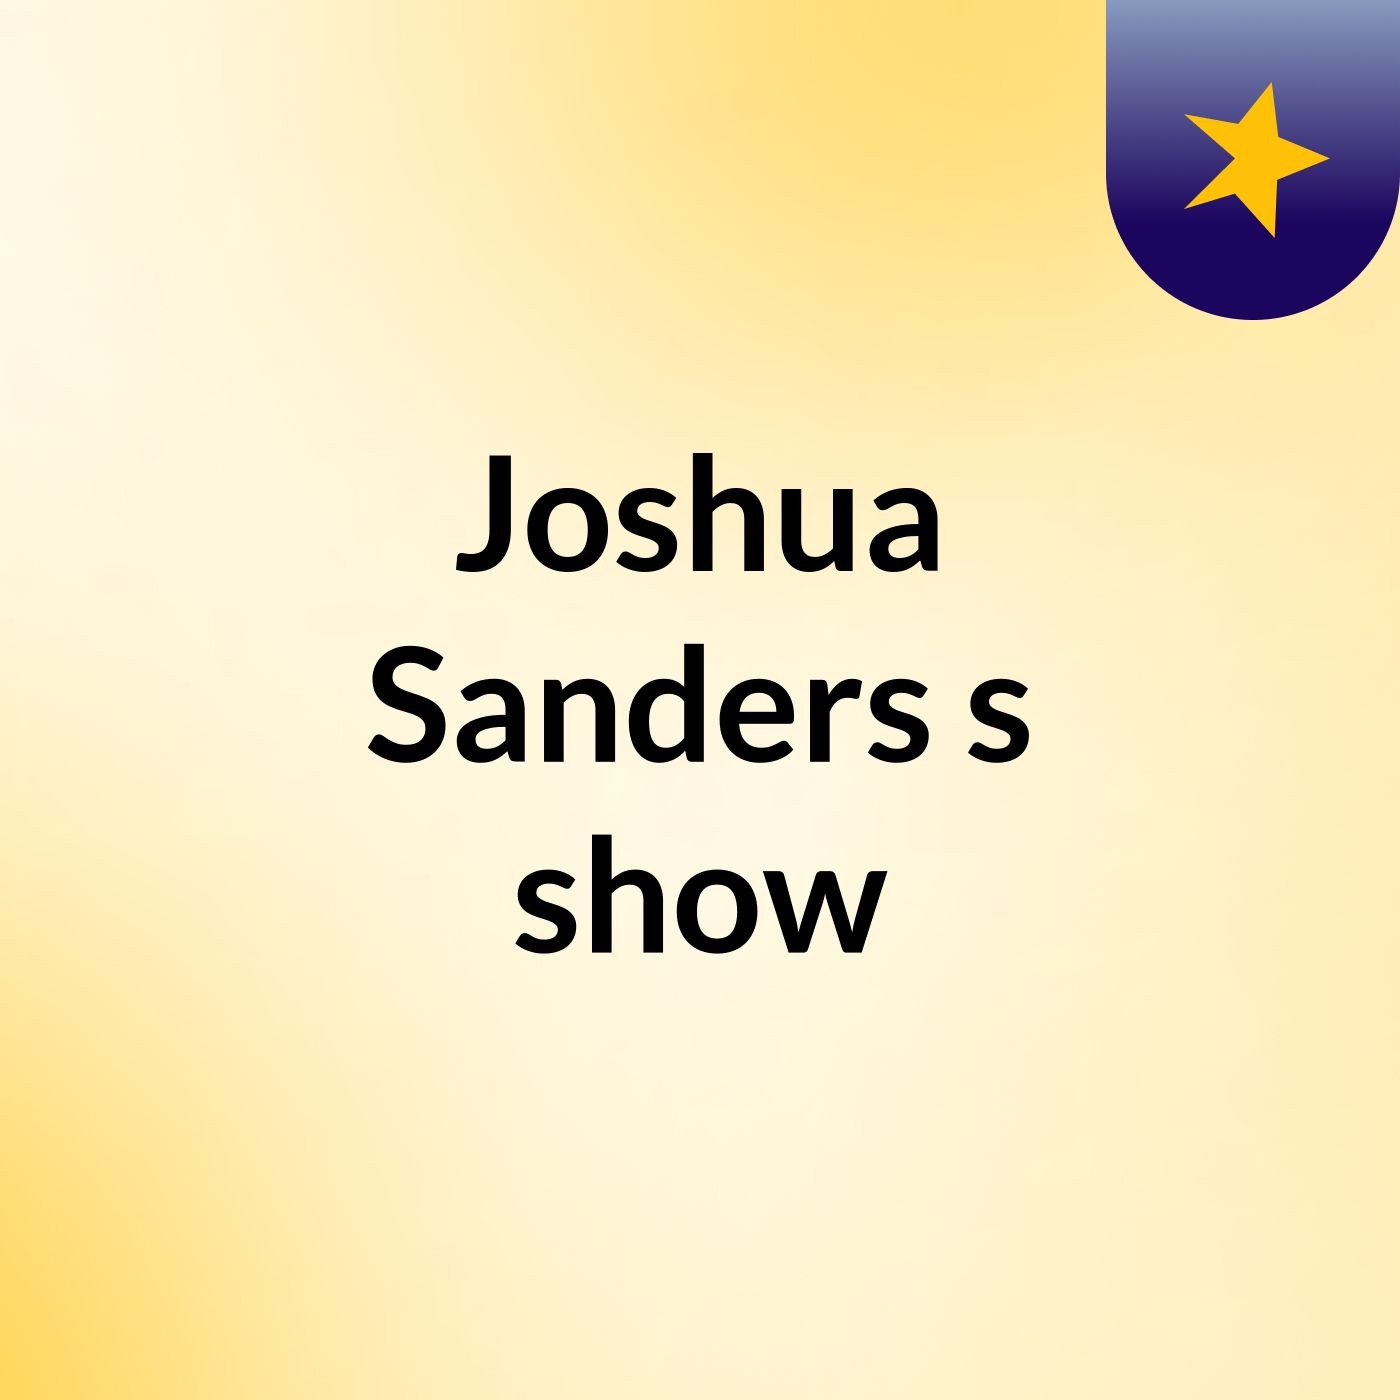 Joshua Sanders's show